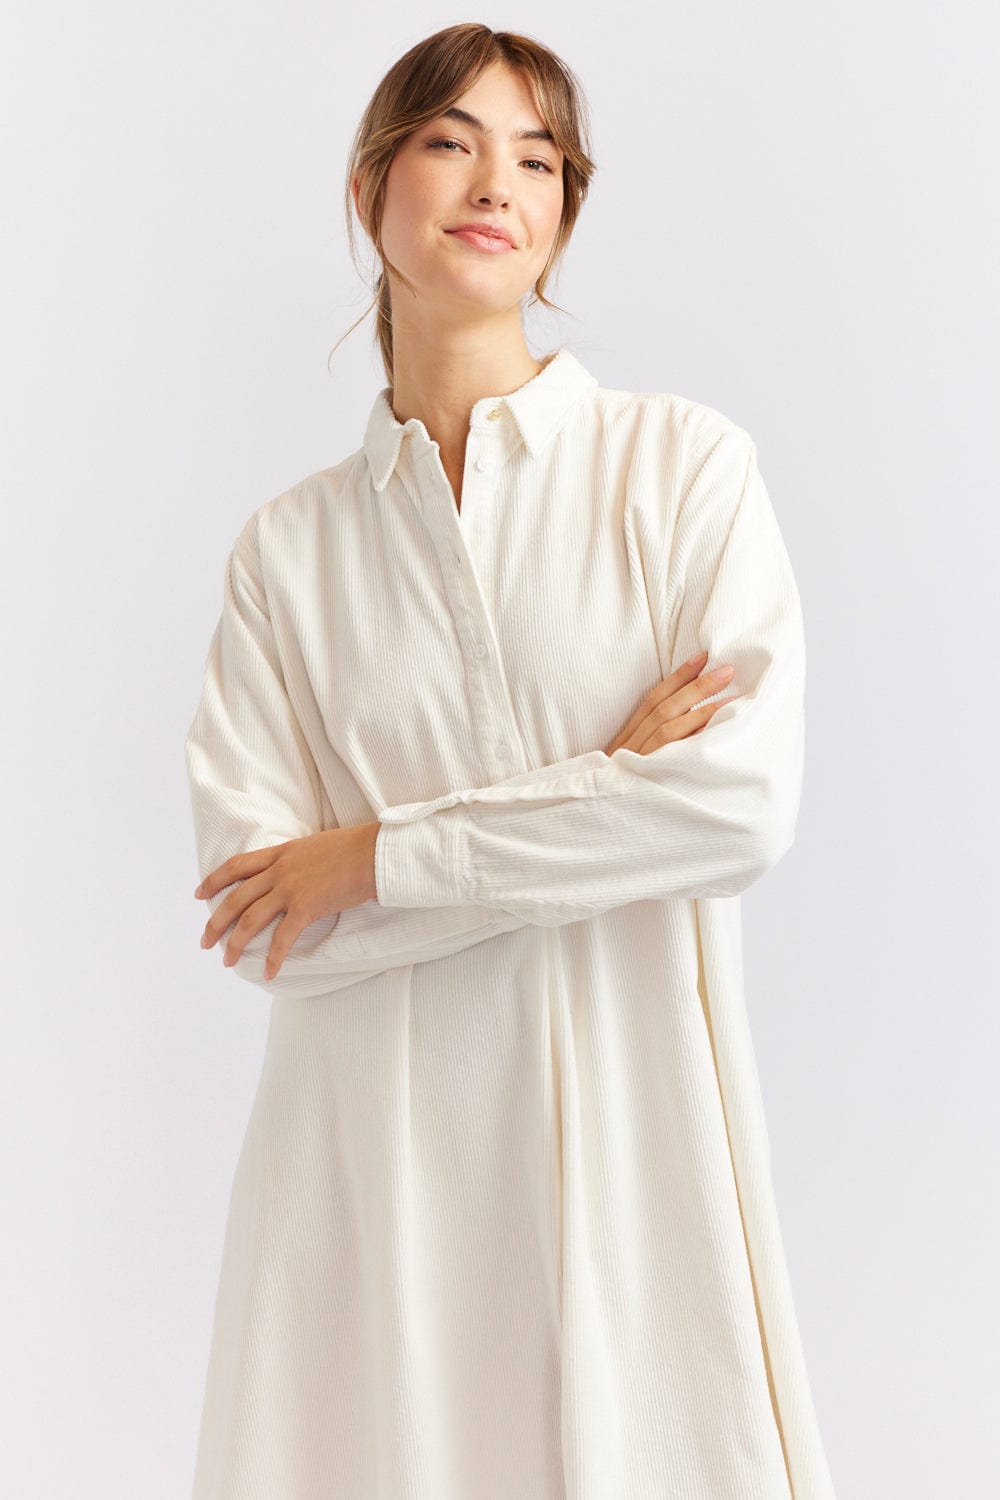 Alessandra Overshirt Corduroy Dress in Ivory White